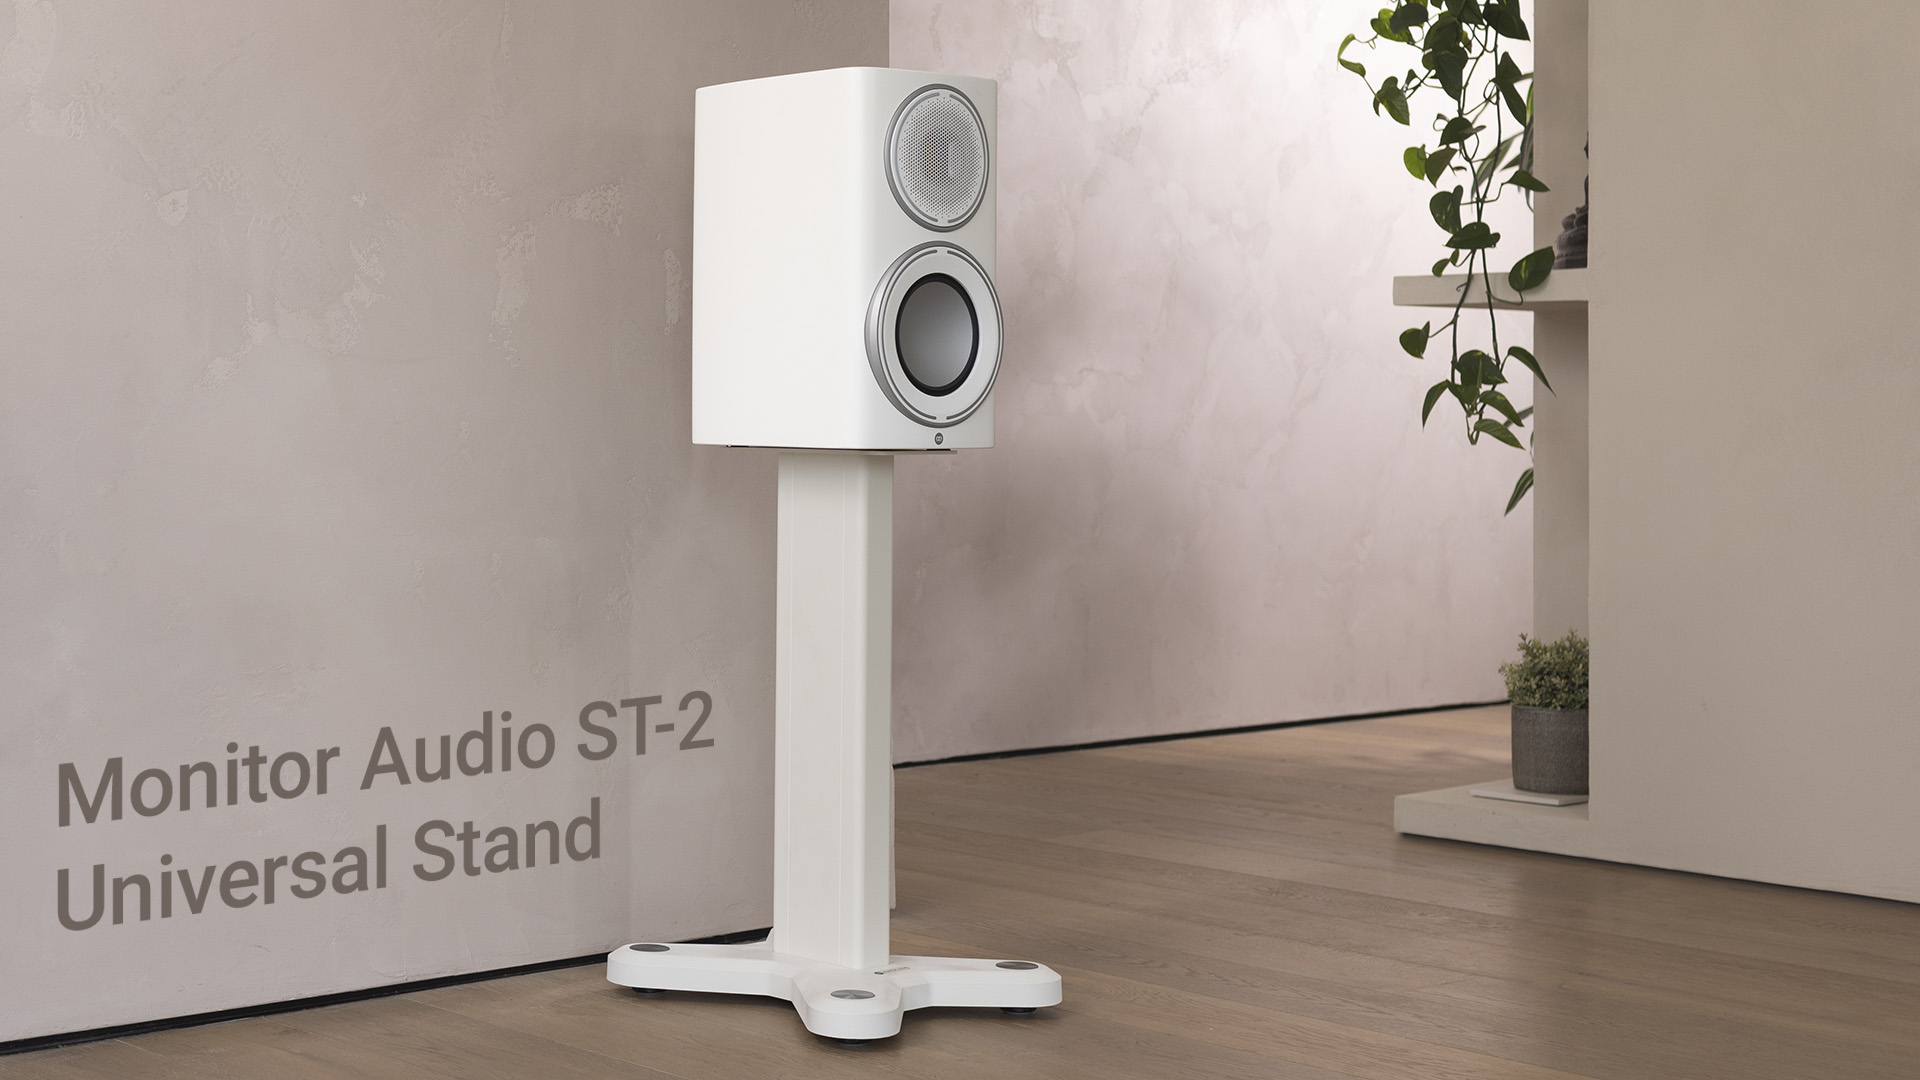 Monitor Audio ST-2 Universal Stand – надёжная опора для «платины» и «золота» – LjN8KD87Q